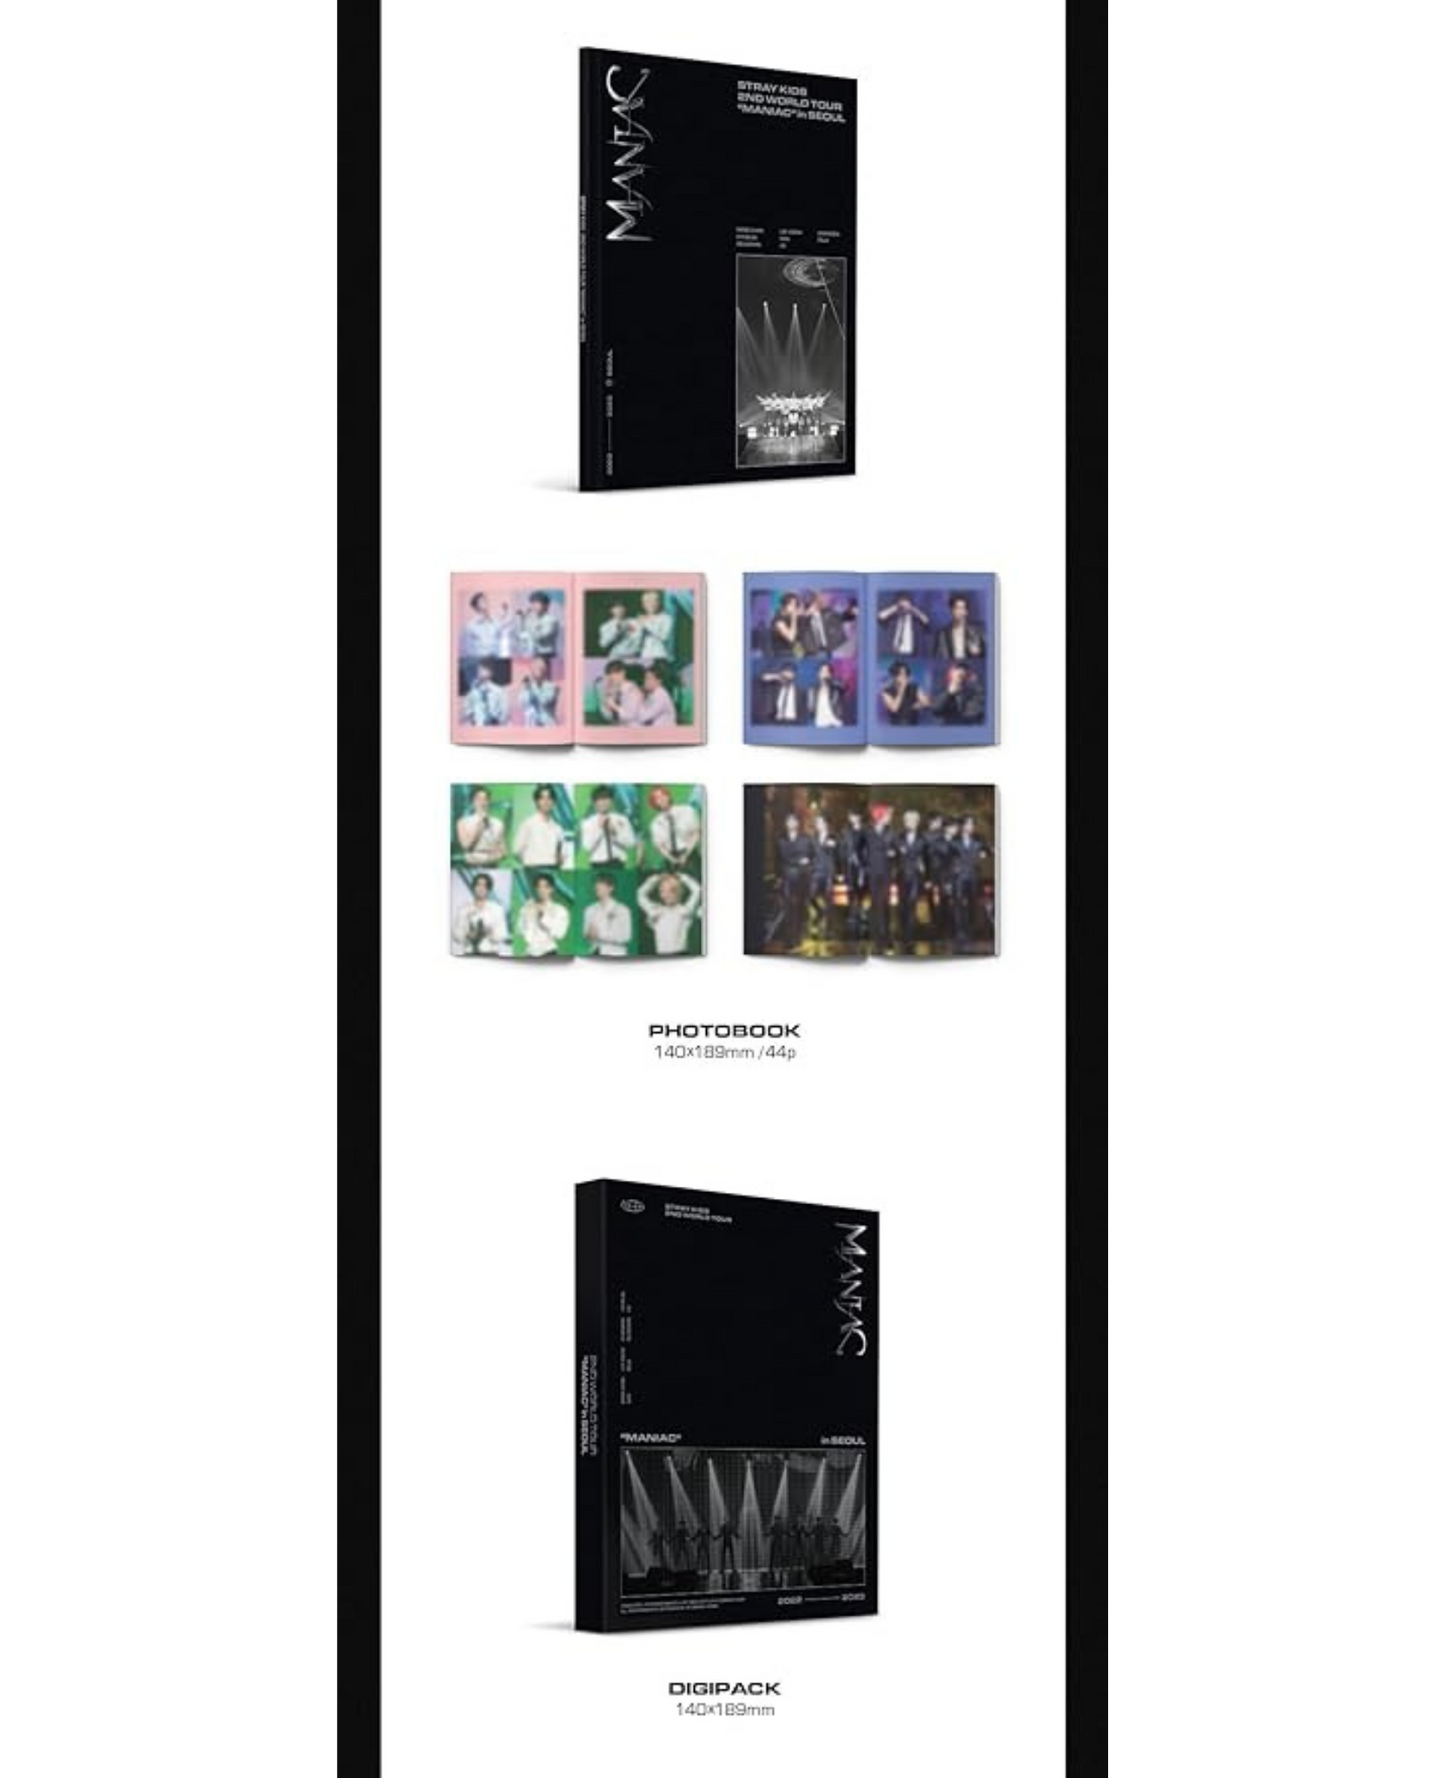 STRAY KIDS - 2nd World Tour “MANIAC” in Seoul (Blu-ray)